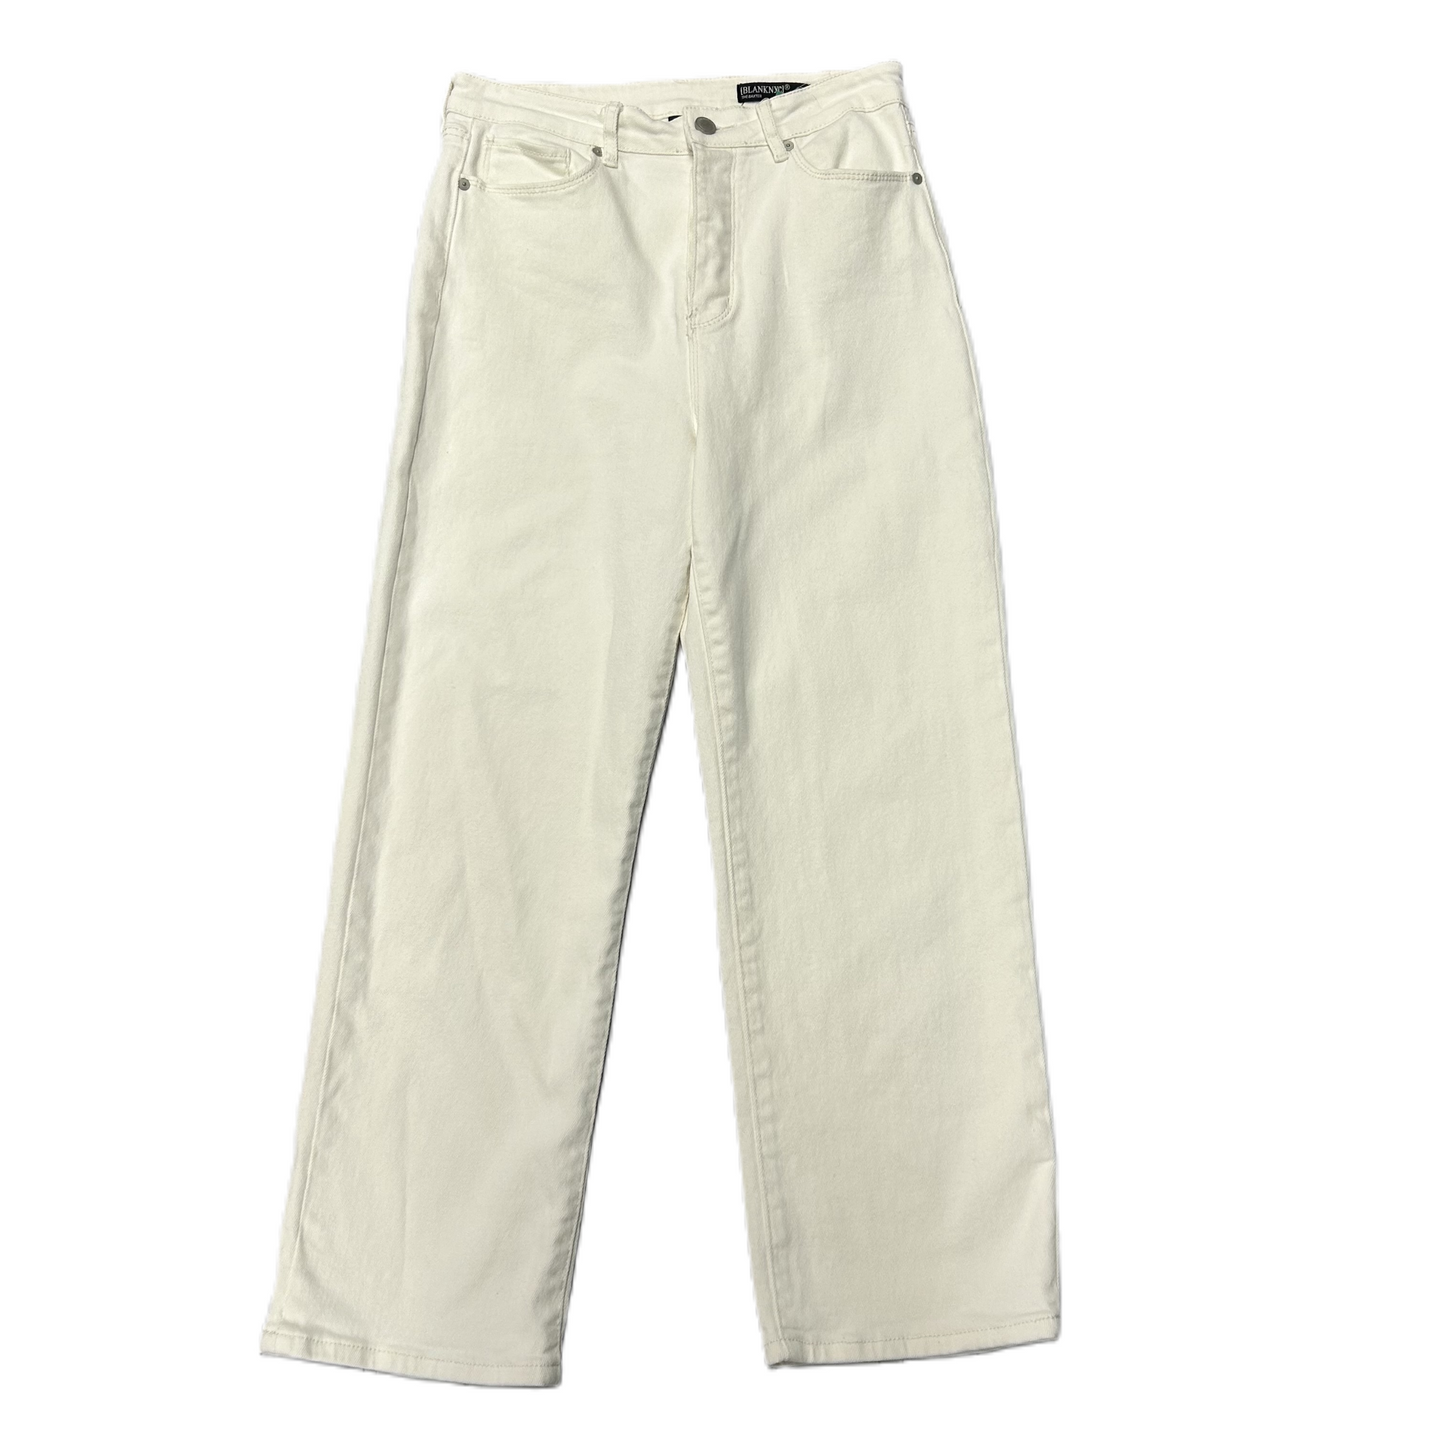 White Jeans Boyfriend By Blanknyc, Size: 10